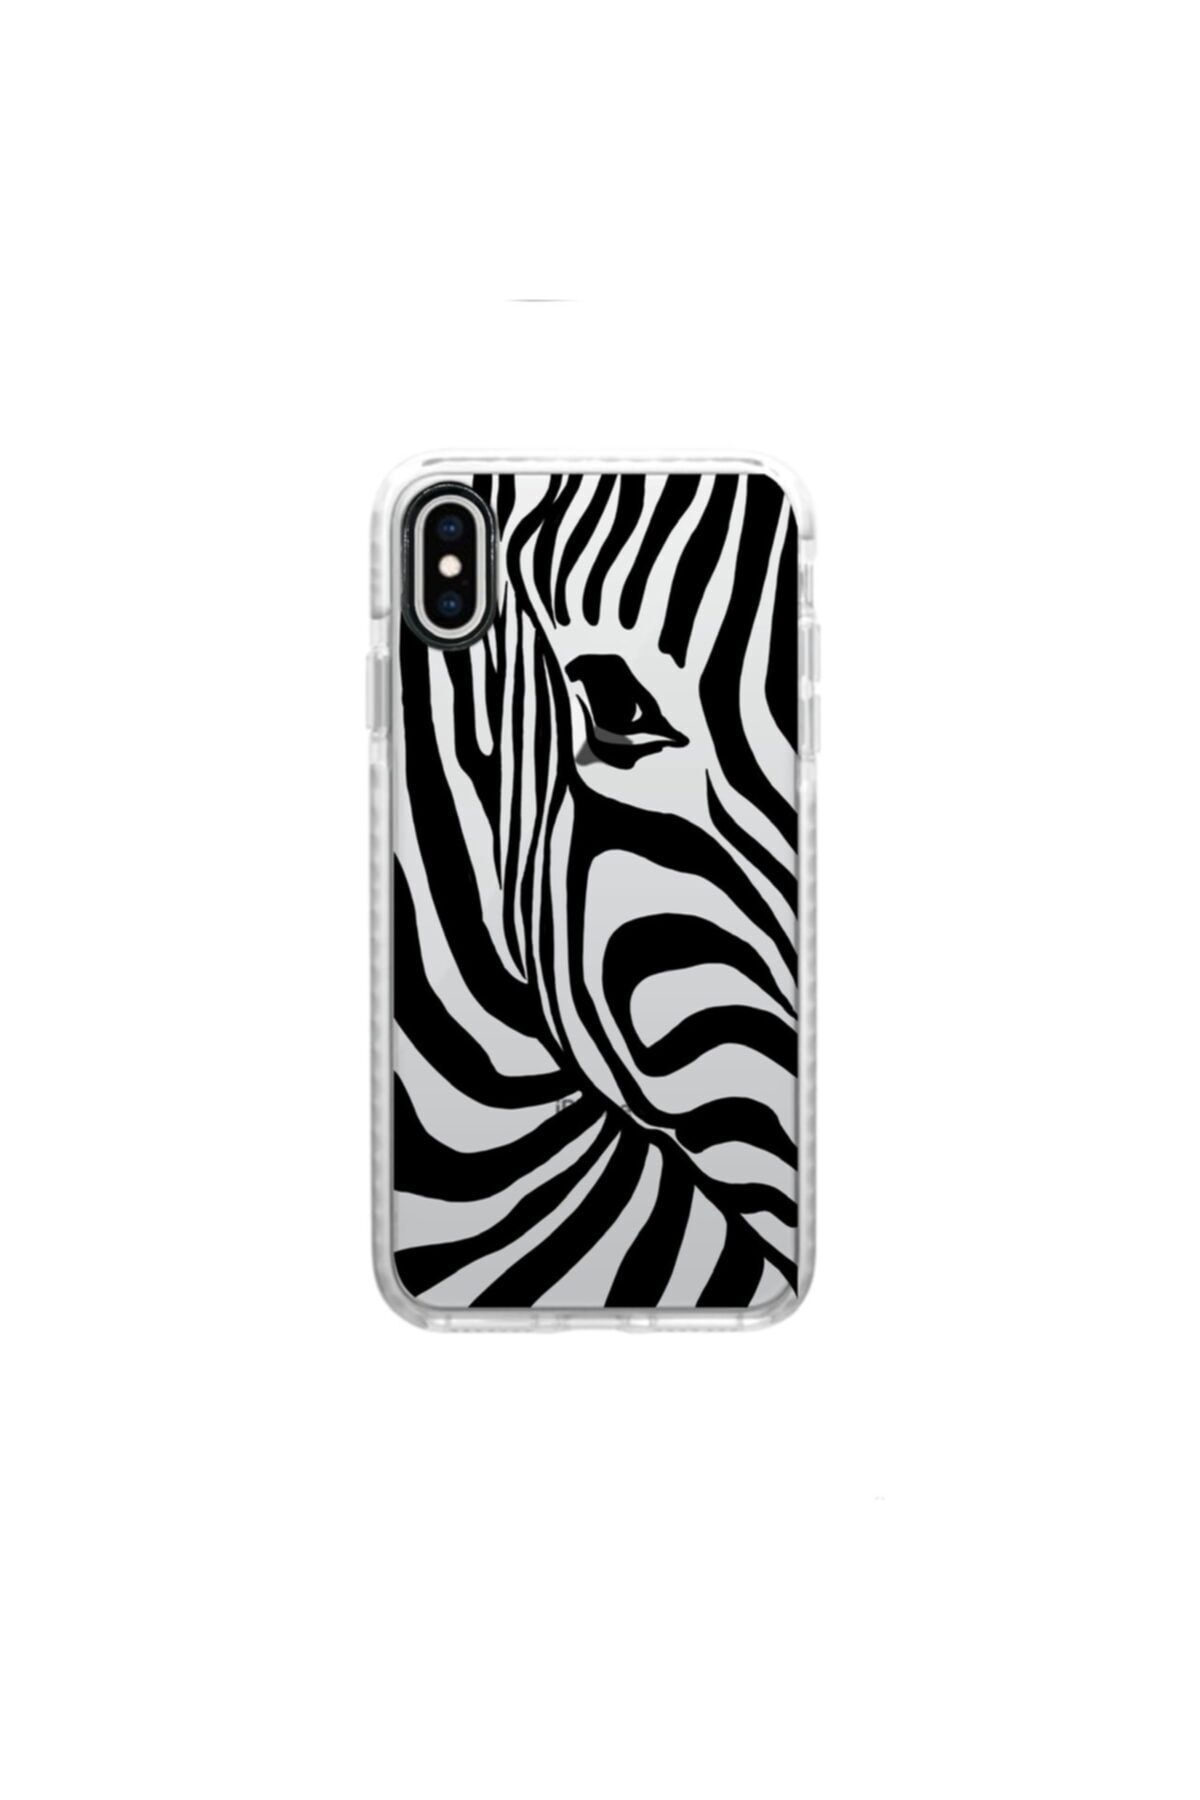 SUMTHINCS Zebra Procase Beyaz Iphone Xr Telefon Kılıfı